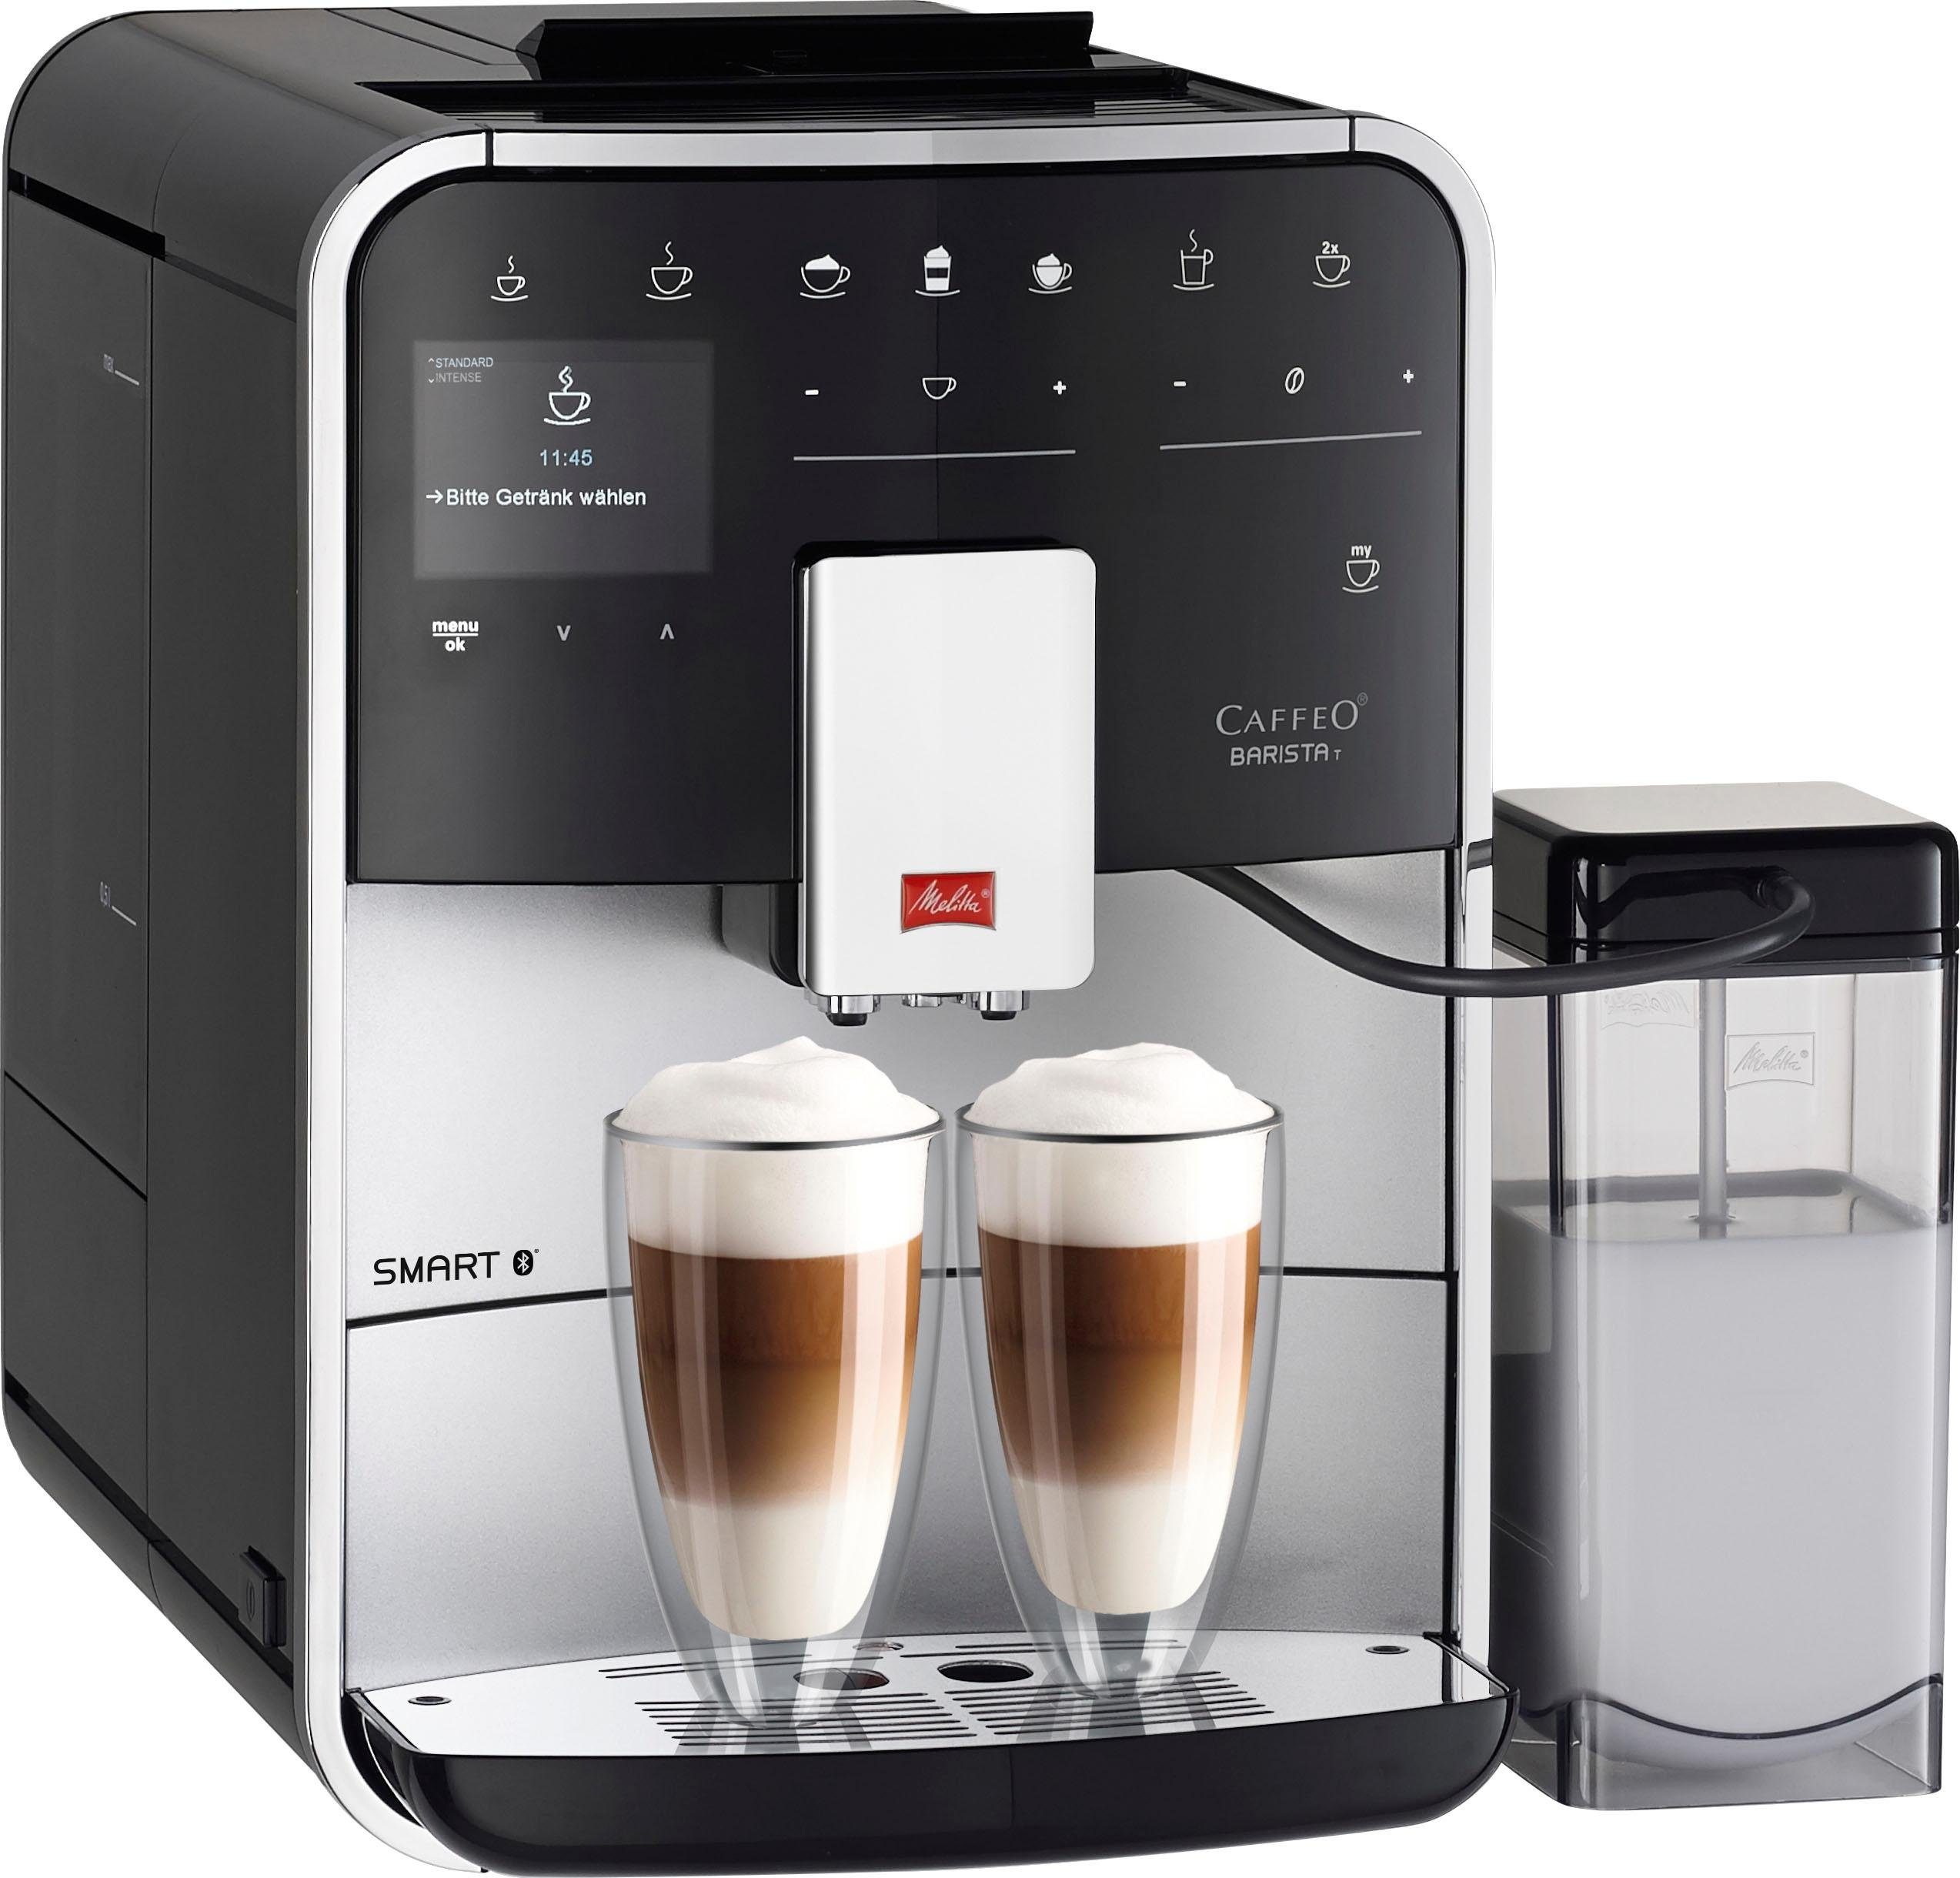 Melitta Kaffeevollautomat Barista T silber, F Smart® Benutzerprofile&18 4 Kaffeerezepte, italienischem nach 83/0-101